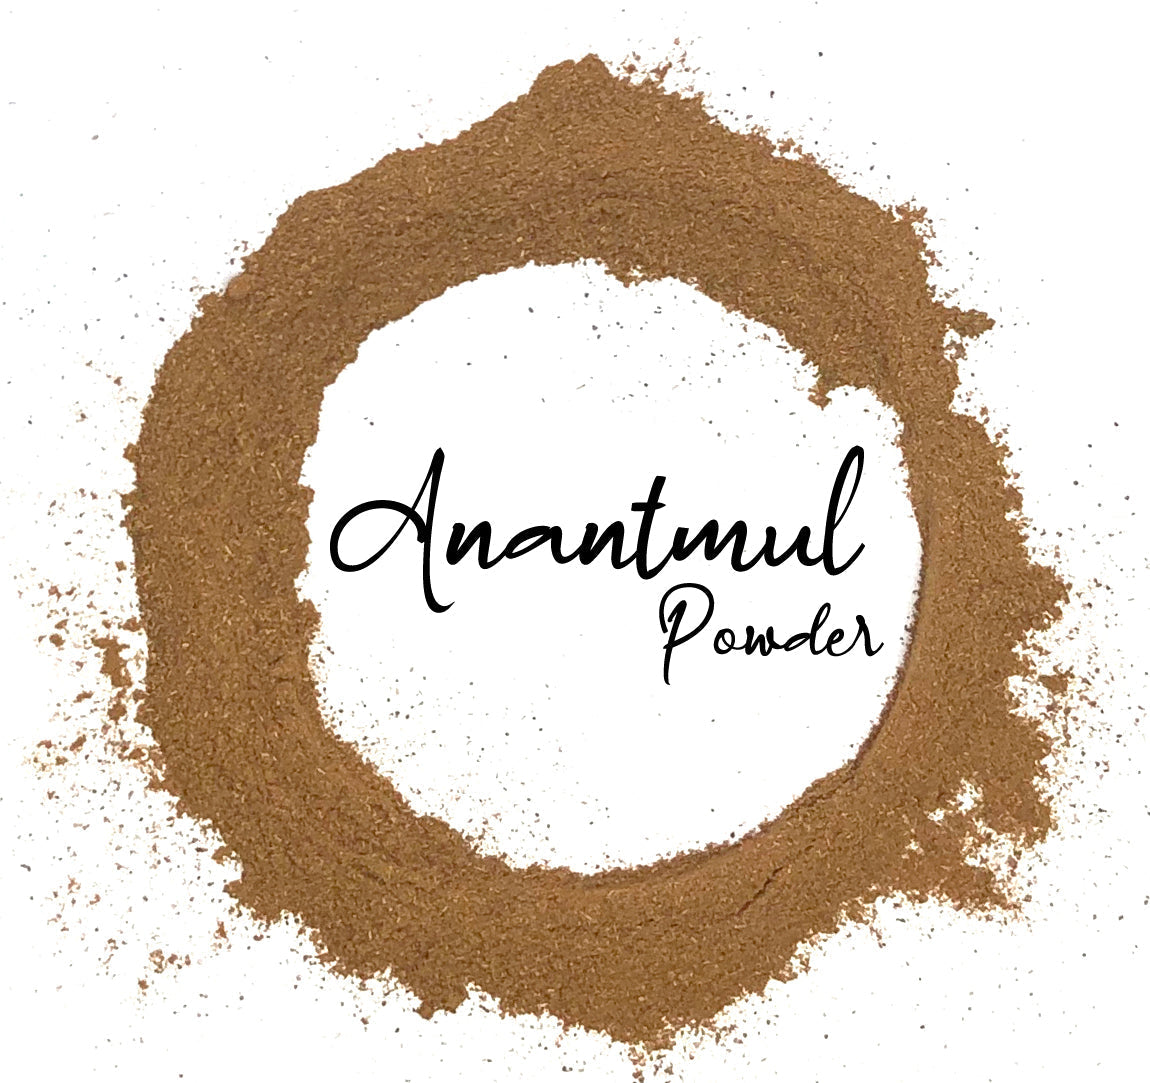 Wholesale Spices & Herbs - Anantmul Powder, Organic 1lb (454g) Bag